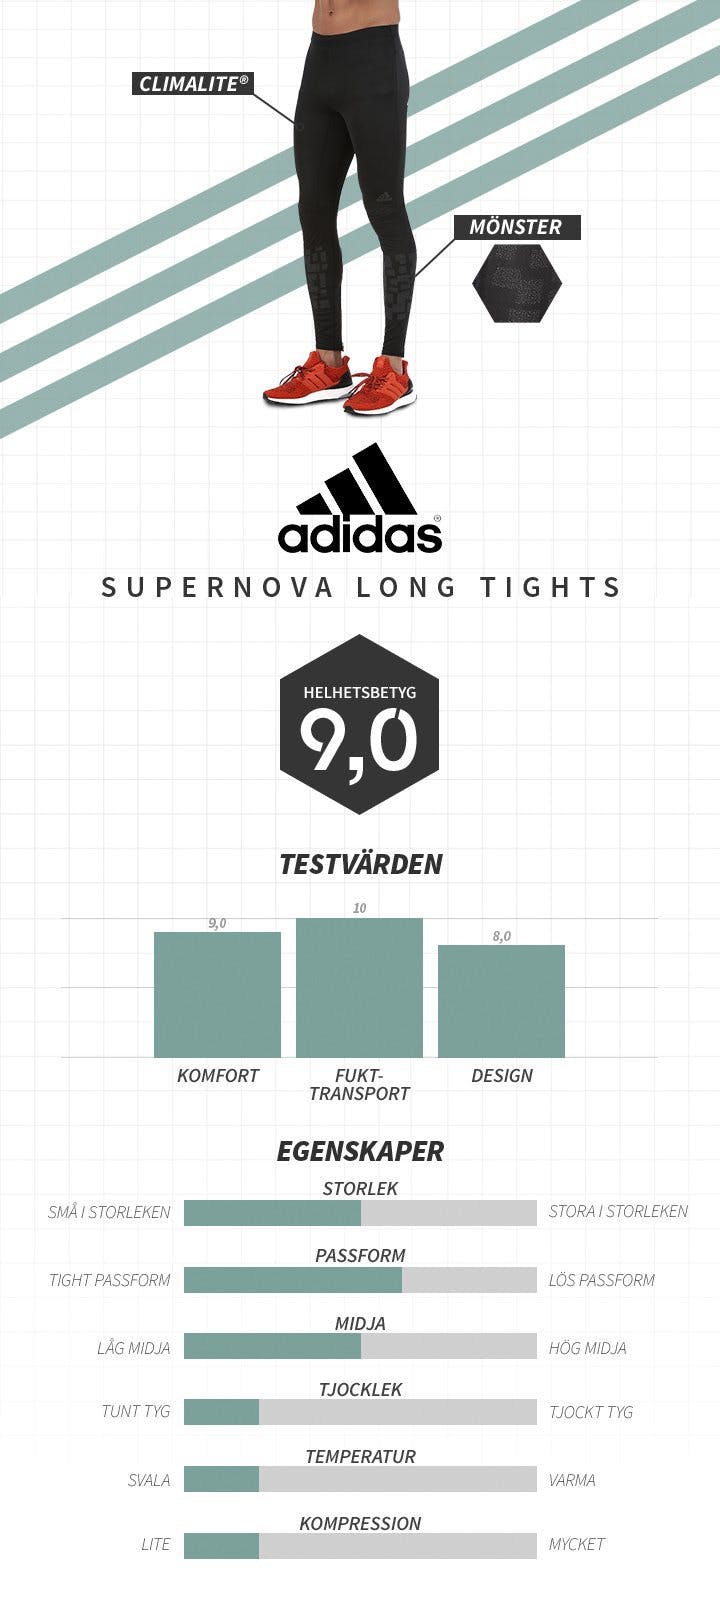 adidas supernova long tight